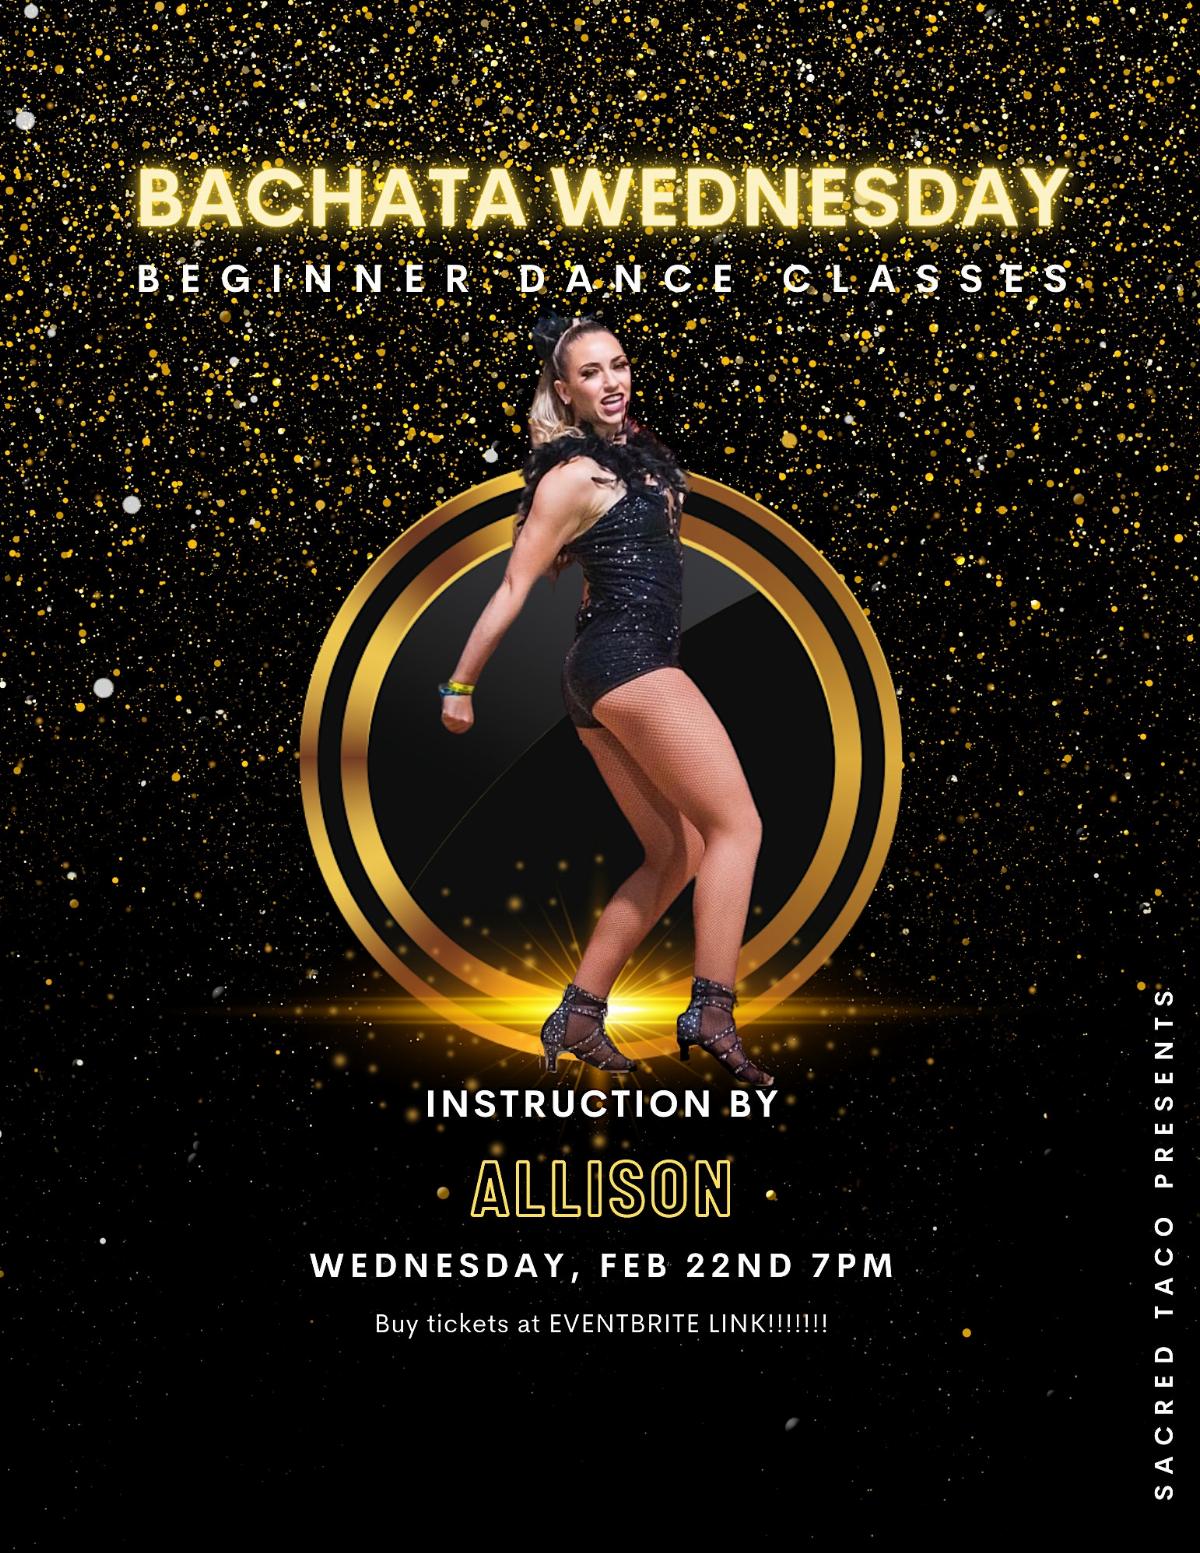 Sacred Bachata Wednesdays Beginner Class